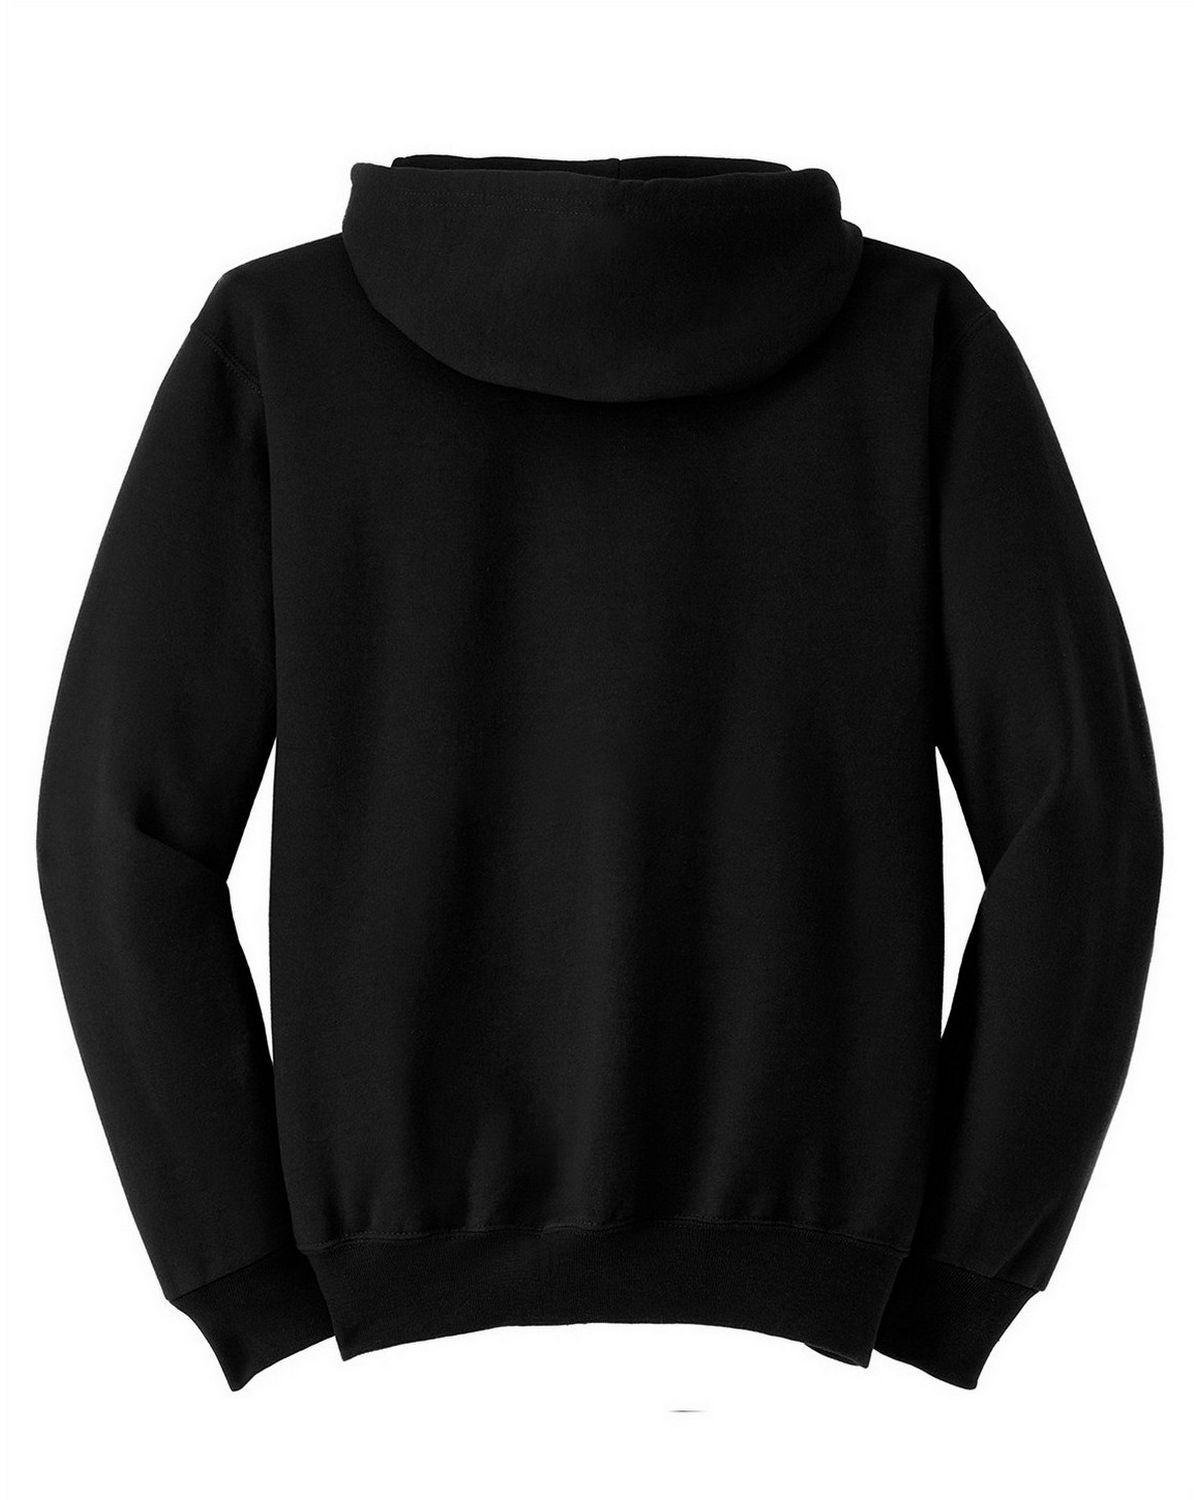 Jerzees 4999M Super Sweats Full-Zip Hooded Sweatshirt - ApparelnBags.com